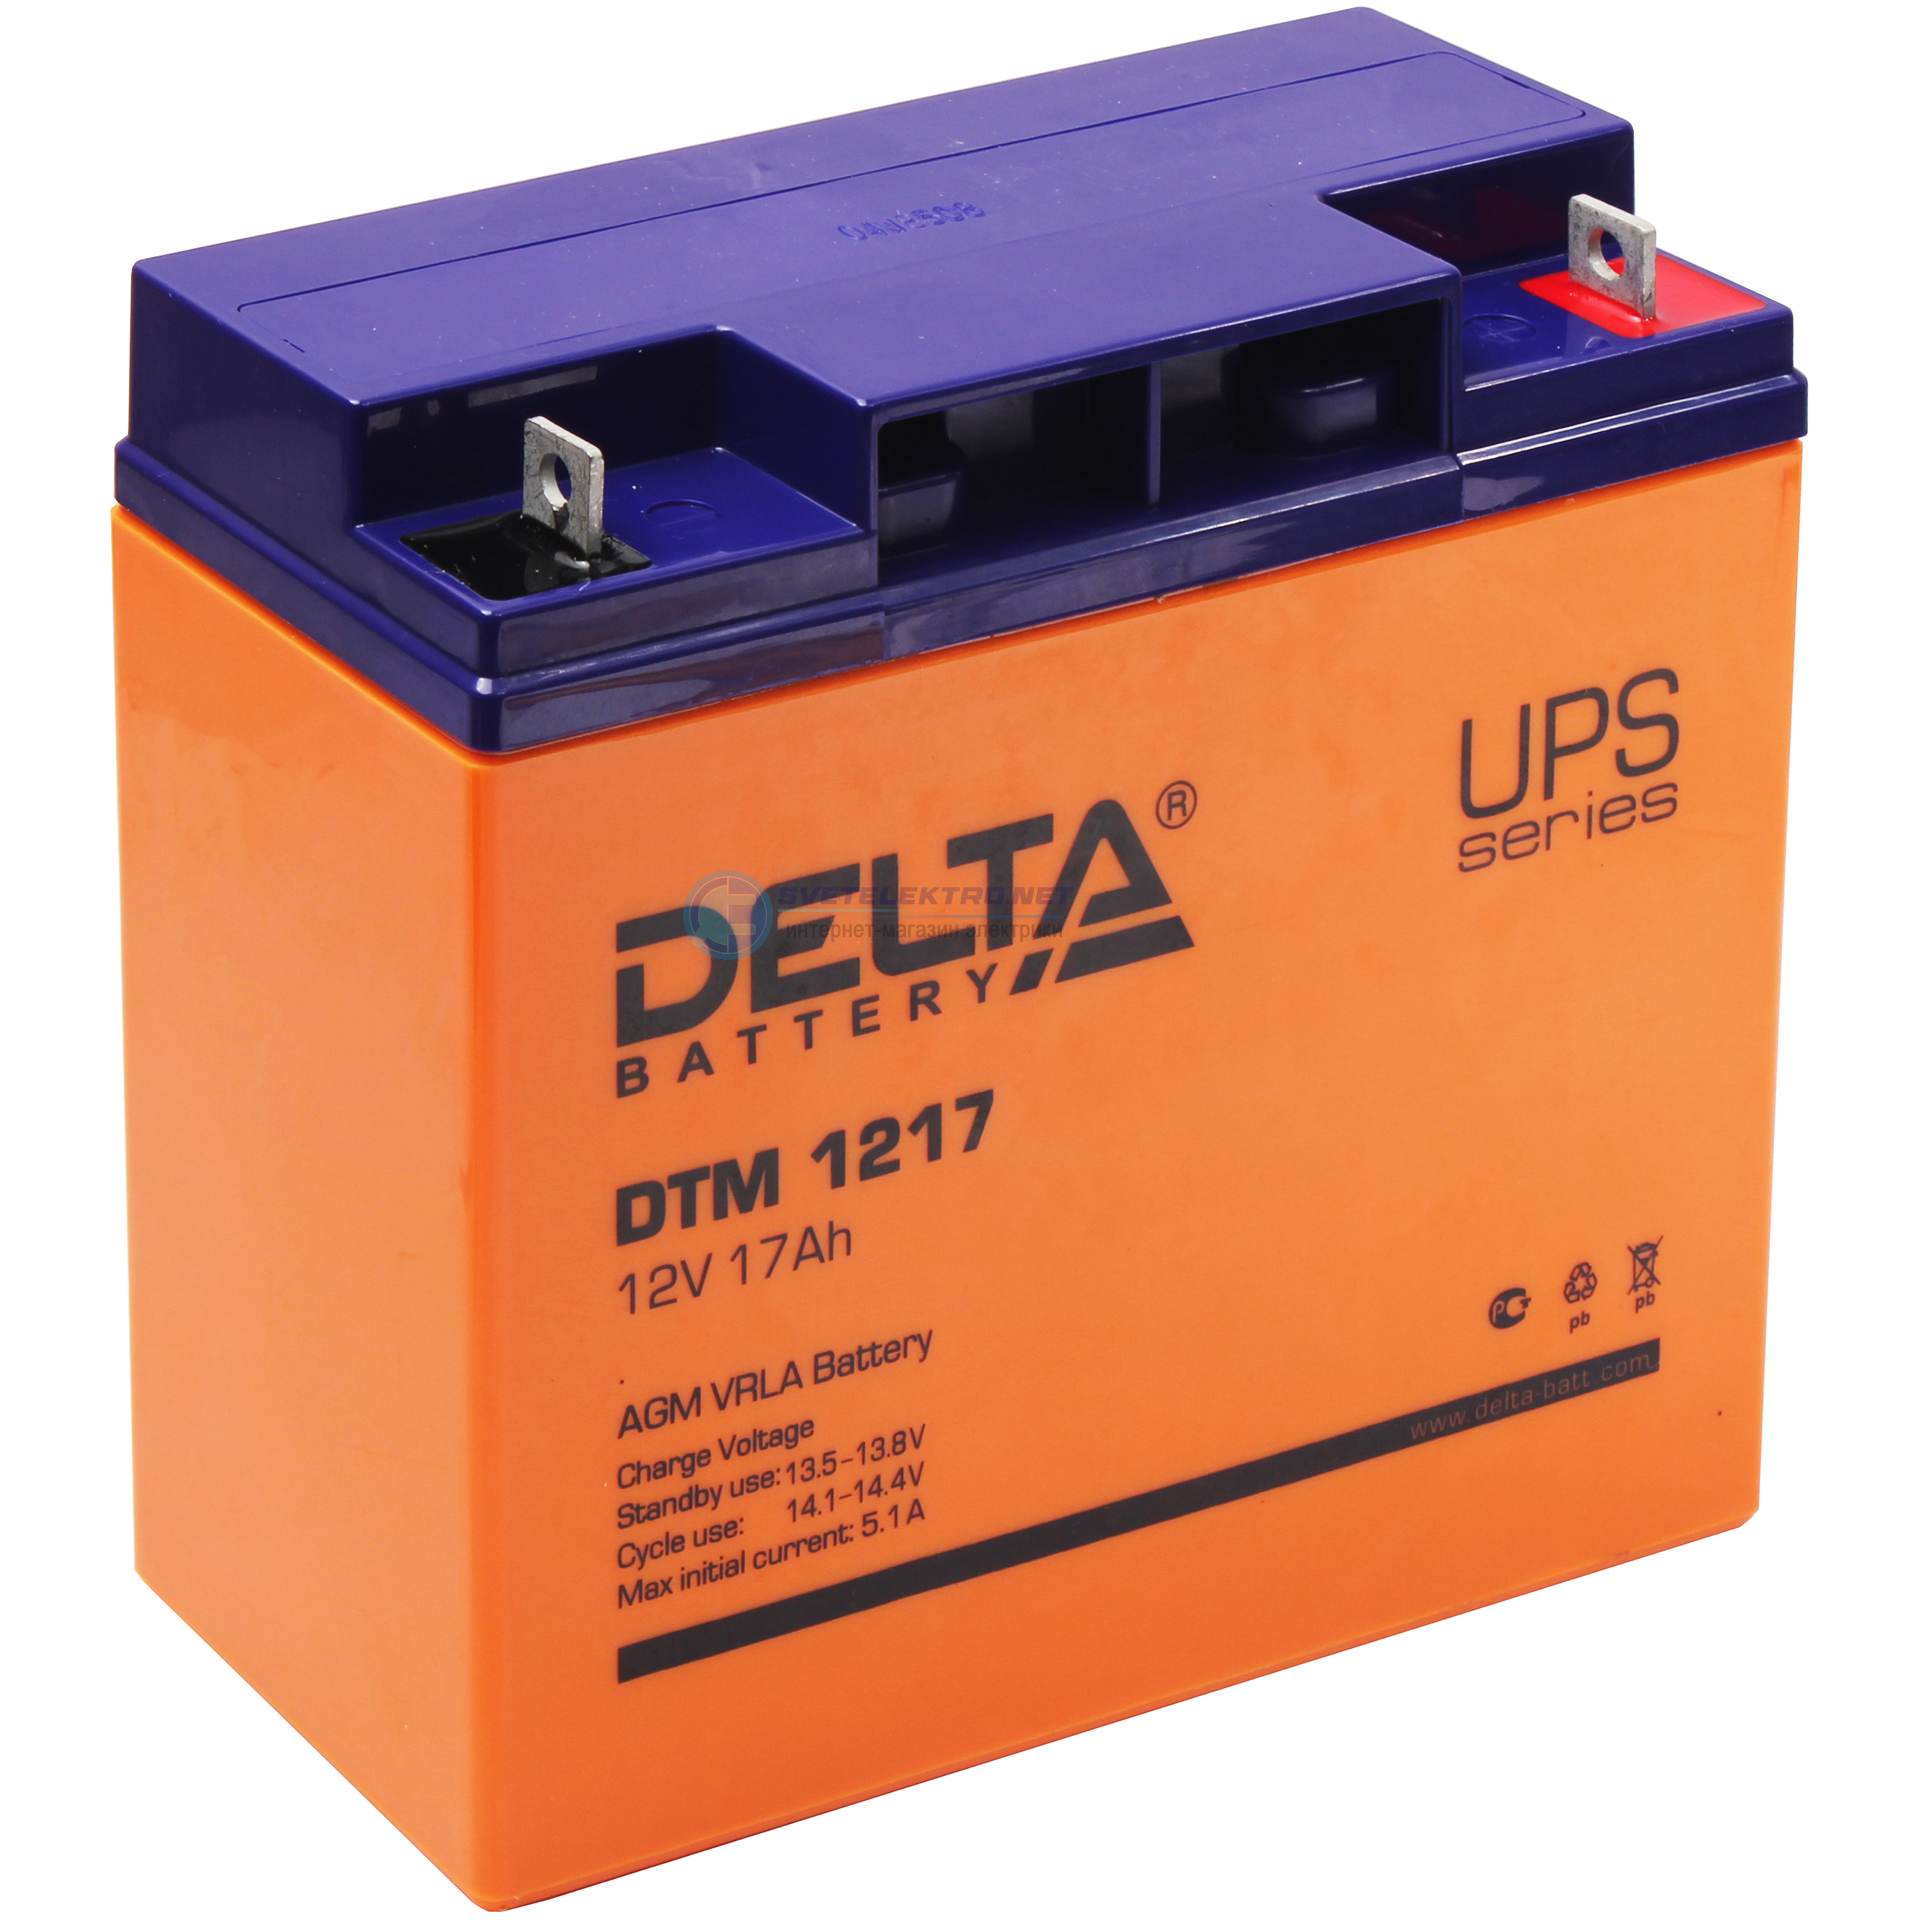 Battery 17 12. Аккумуляторная батарея Delta DT 1217. Импульс 12 17 аккумулятор. DTM 1217.